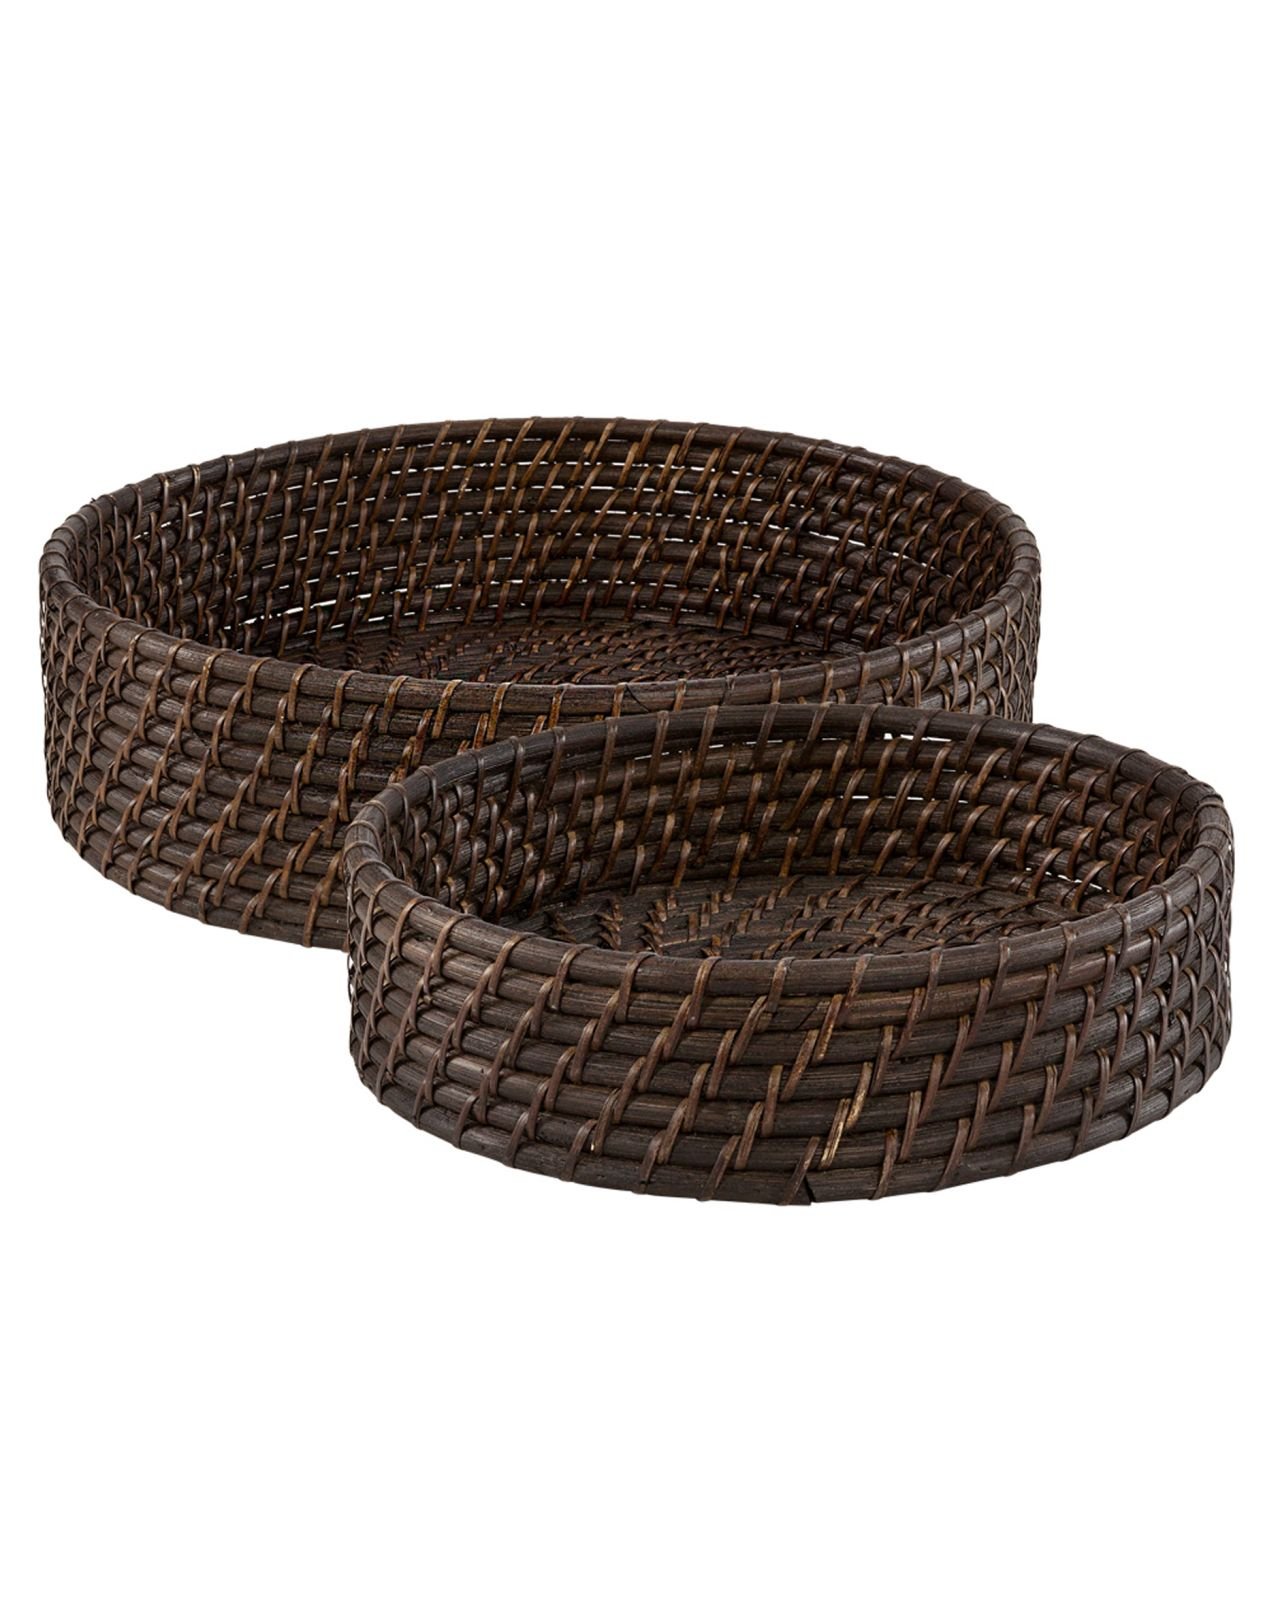 Amazon bread baskets brown